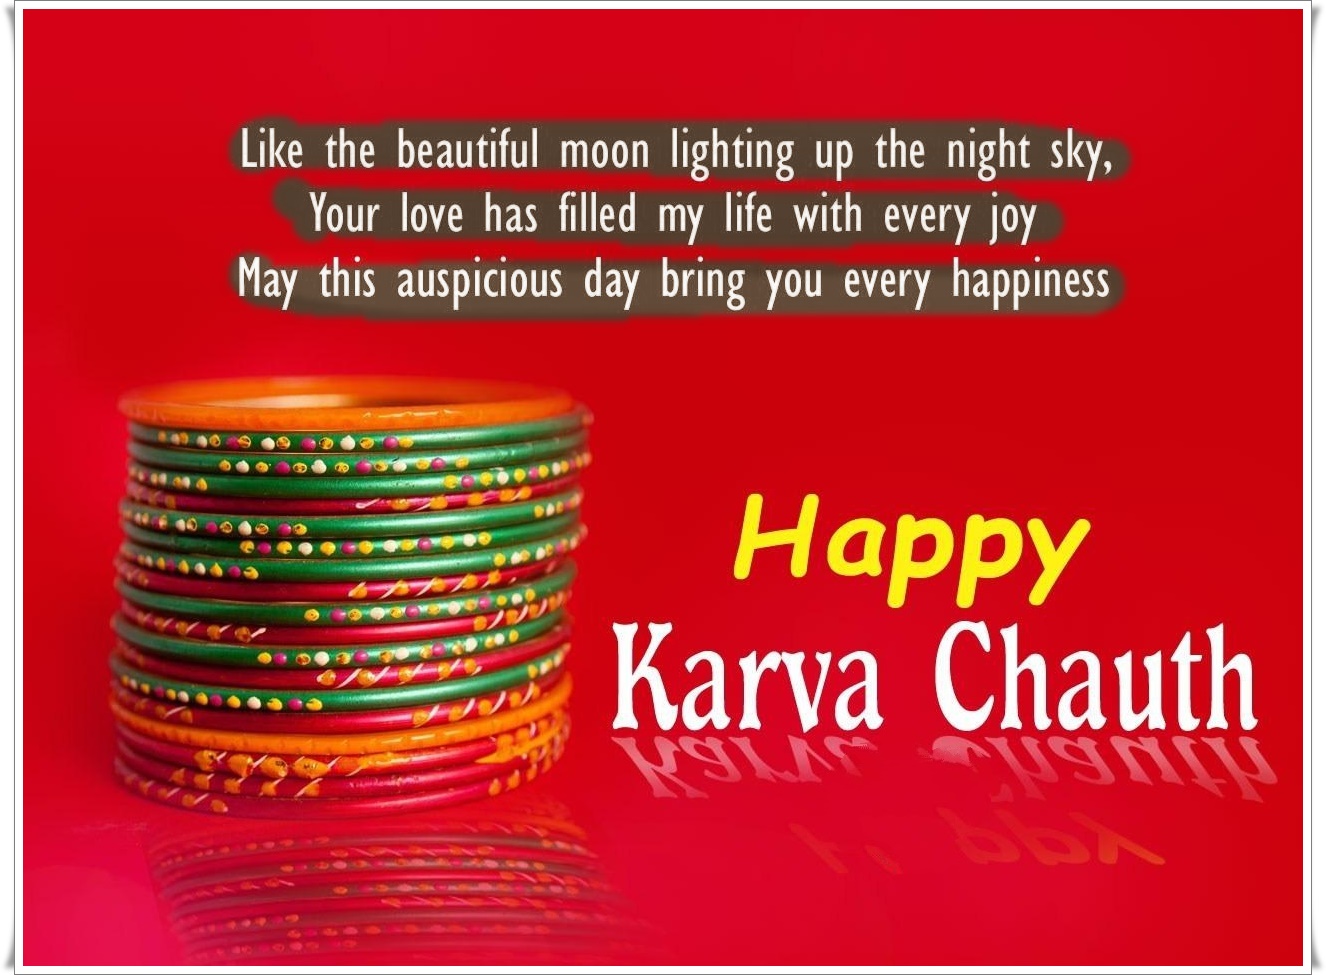 Download free hd wallpapers images of karva chauth karva chauth karva chauth wishes